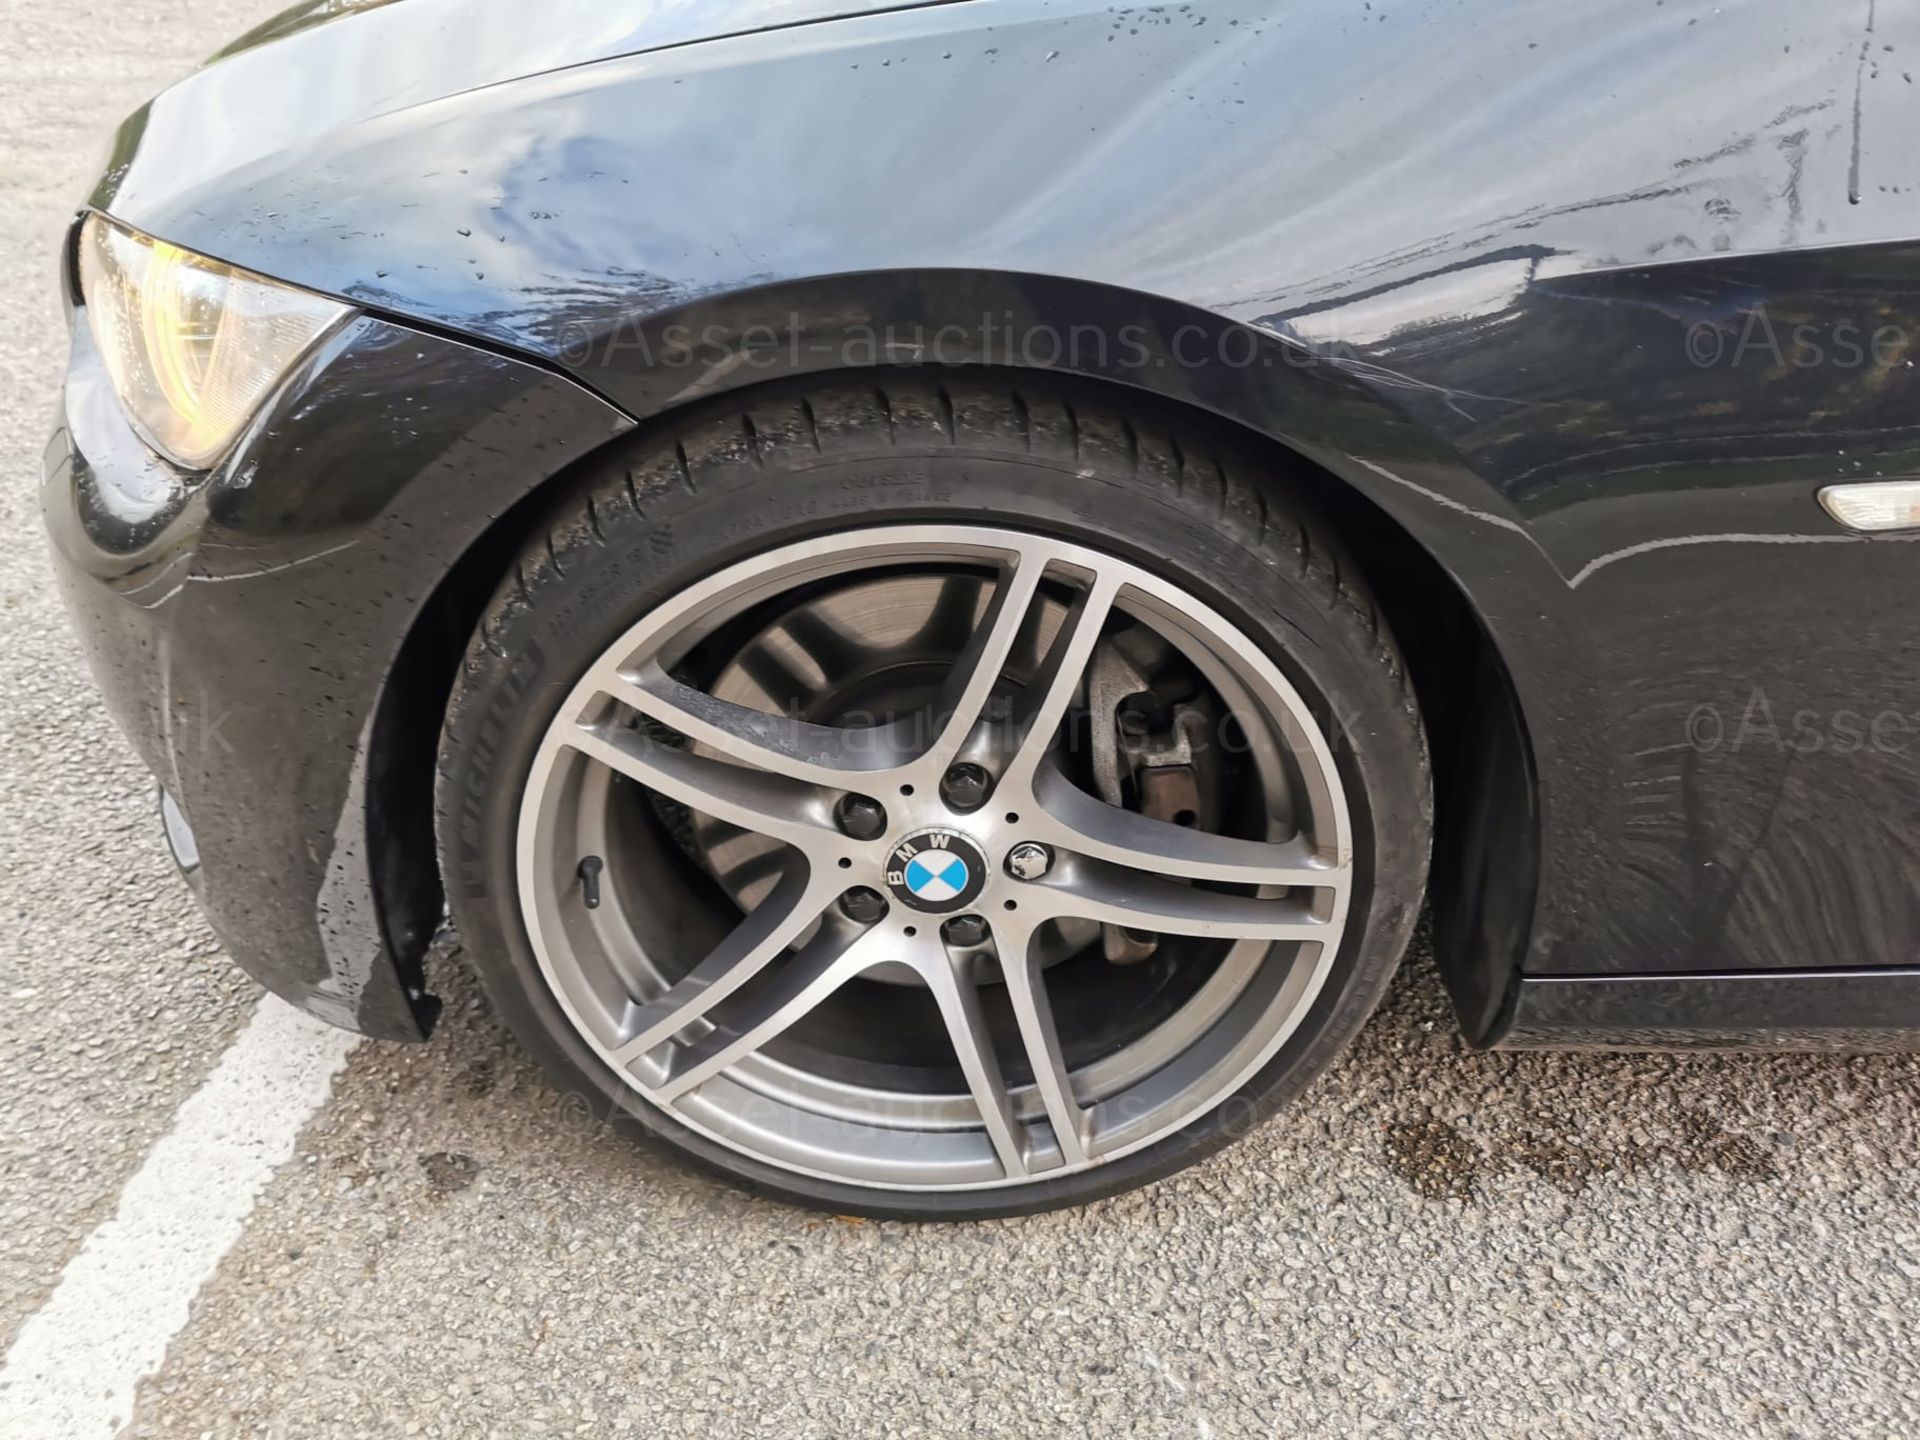 2012 BMW 335I SPORT PLUS EDITION BLACK COUPE, 164,779 MILES, 3.0 PETROL ENGINE *NO VAT* - Image 10 of 29